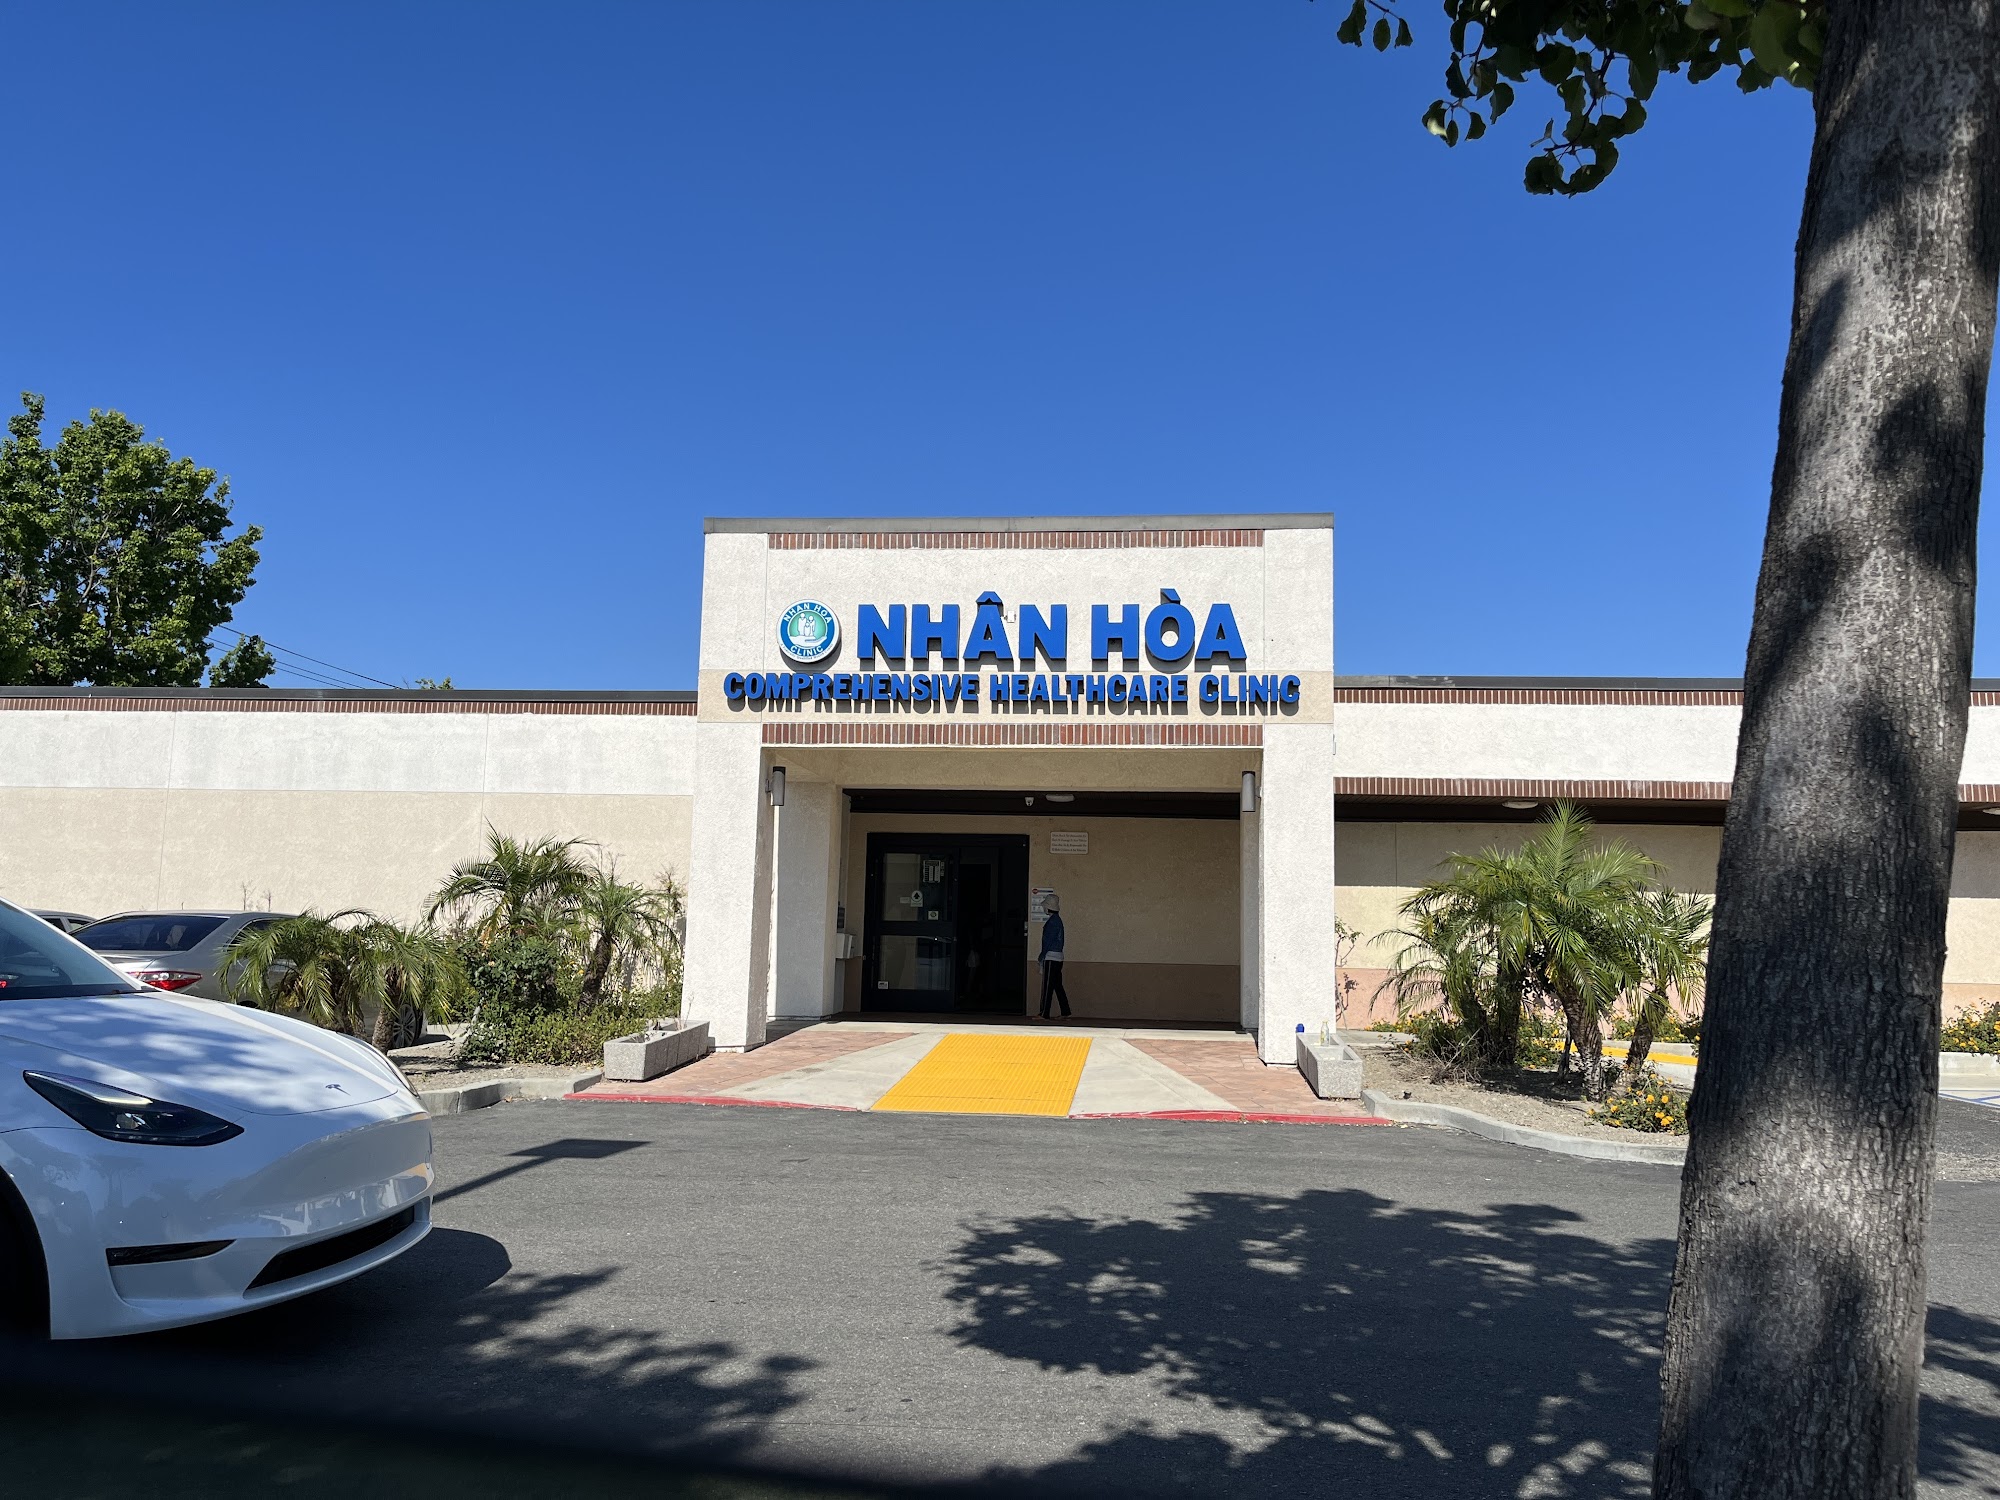 Nhan Hoa Health Care Clinic